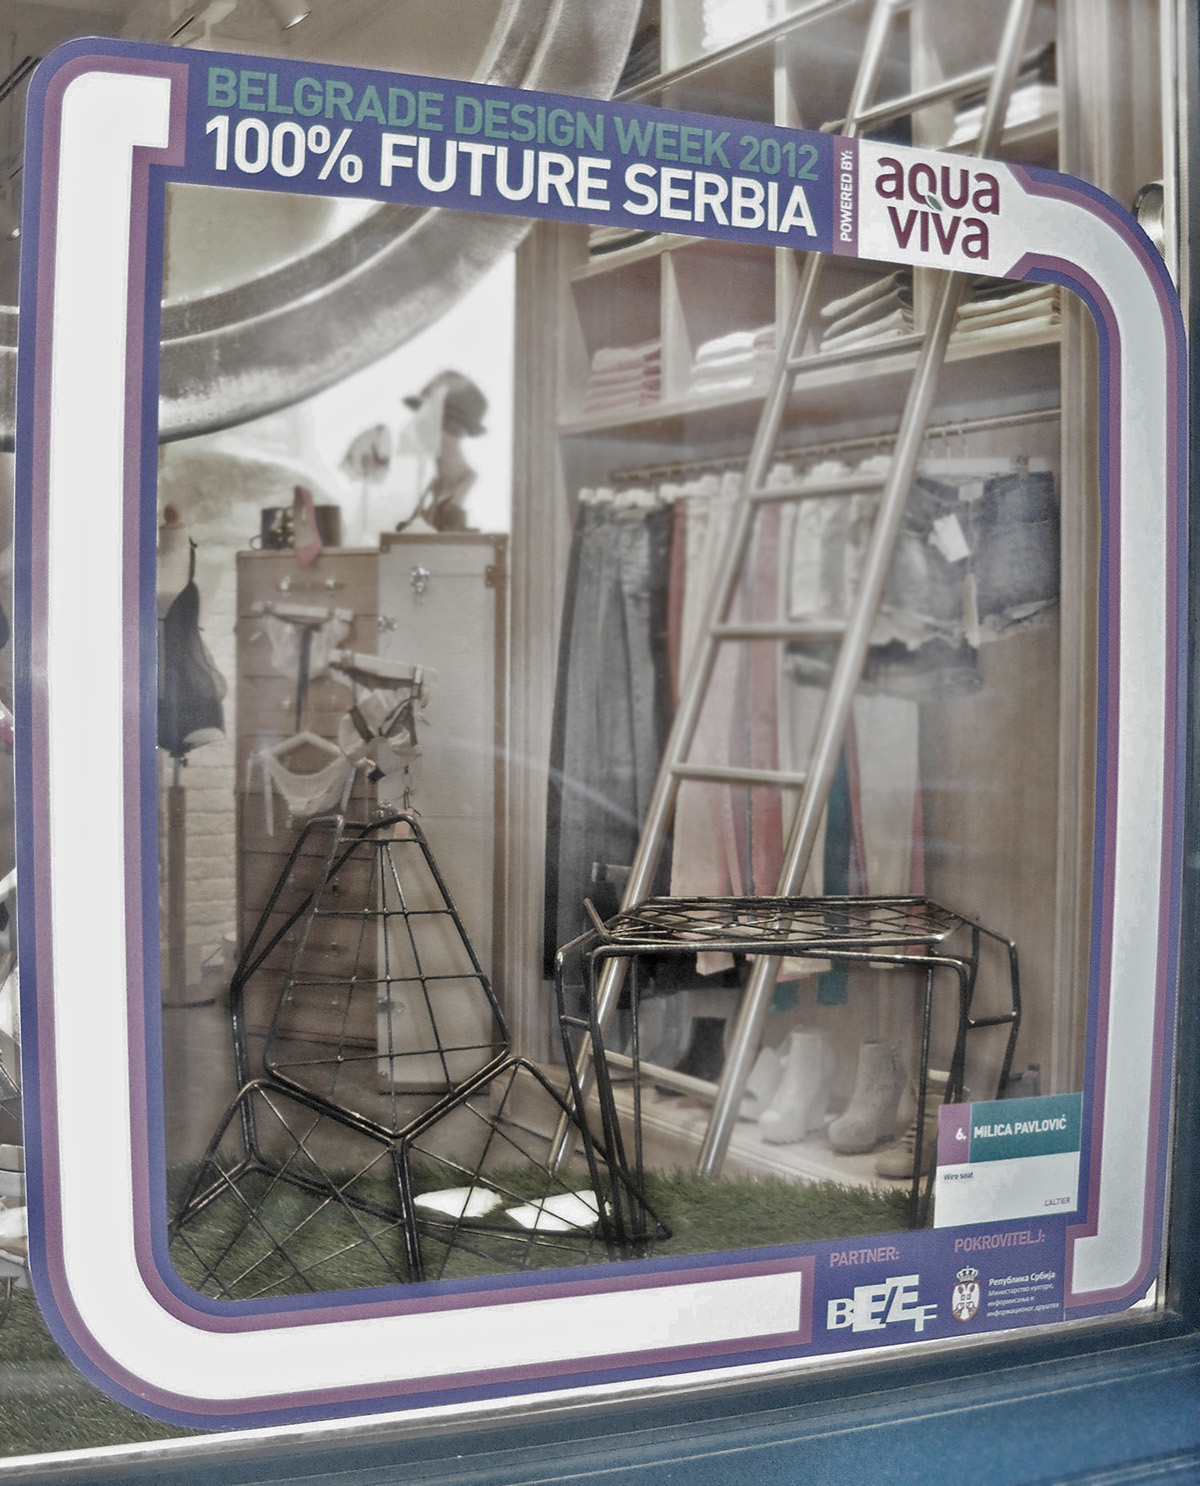 wire seat belgrade design week 100% future serbia